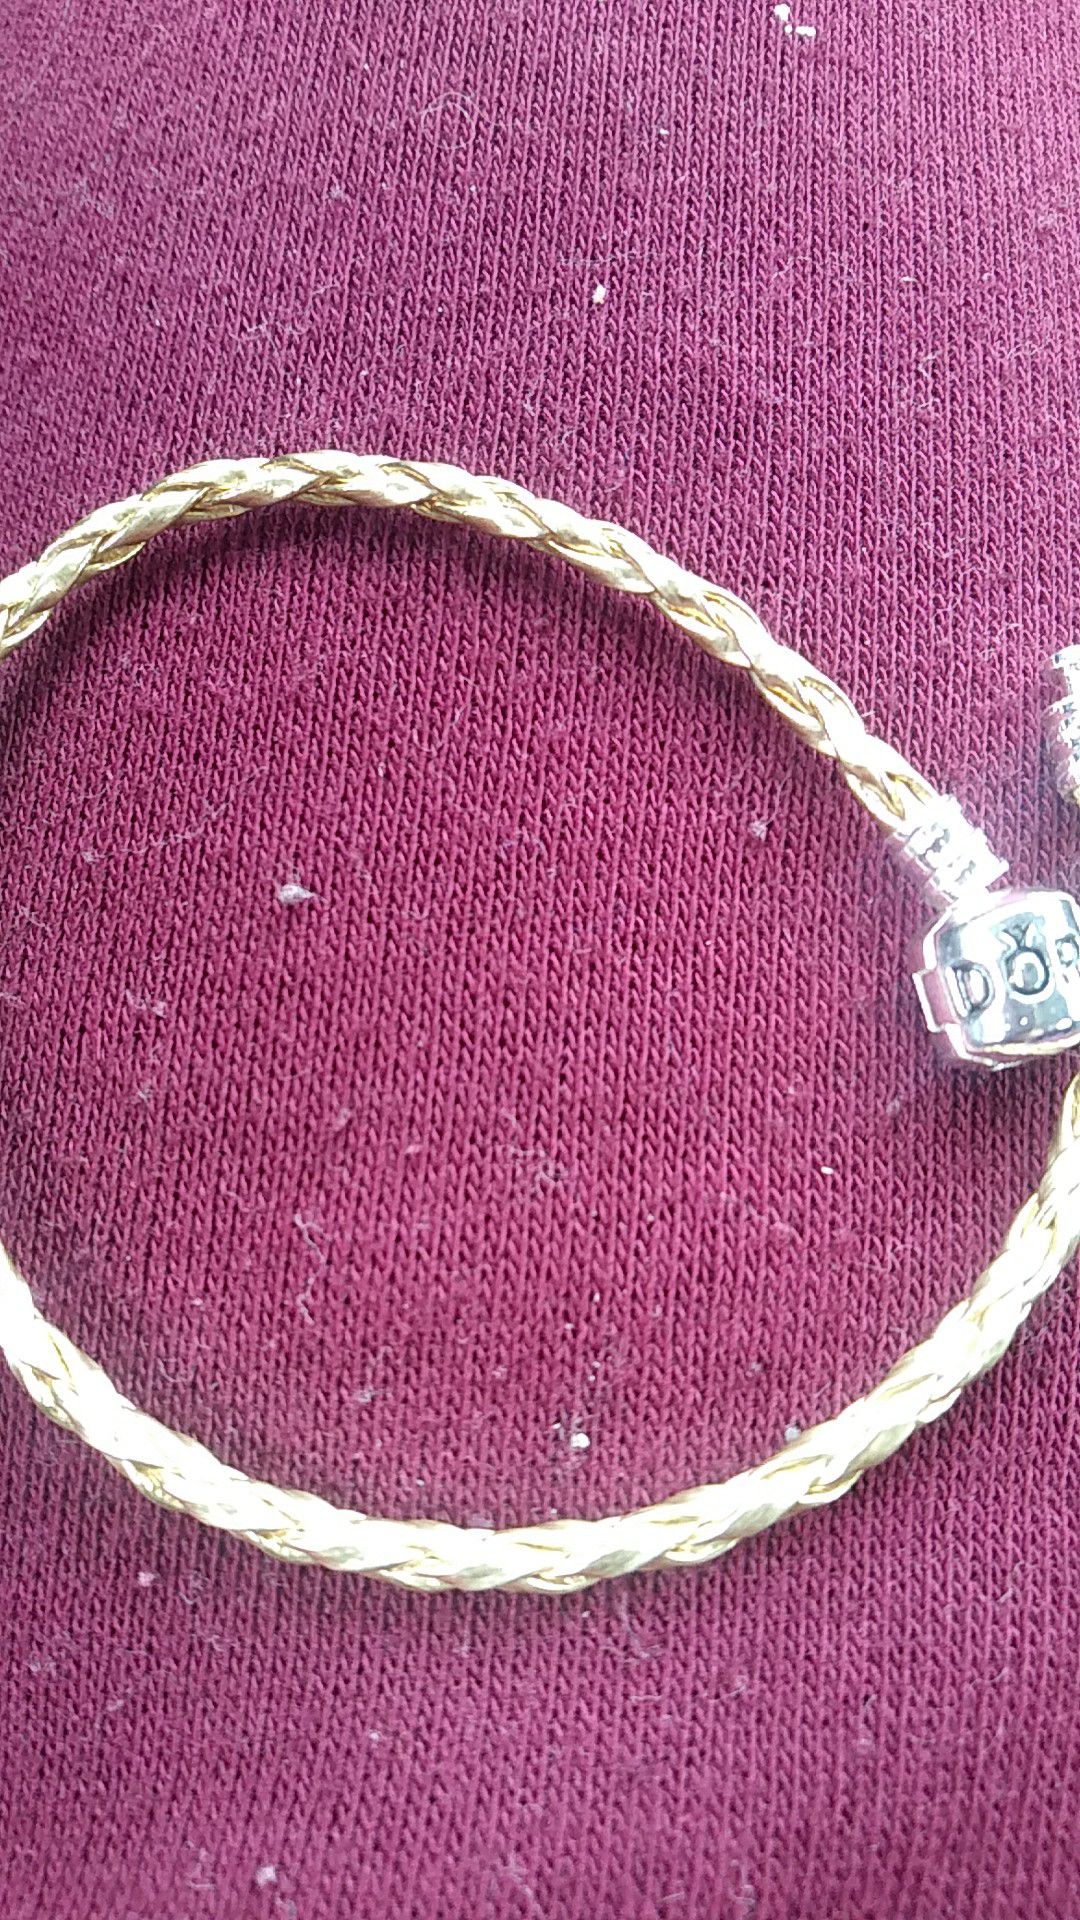 Pandora style gold leather bracelet